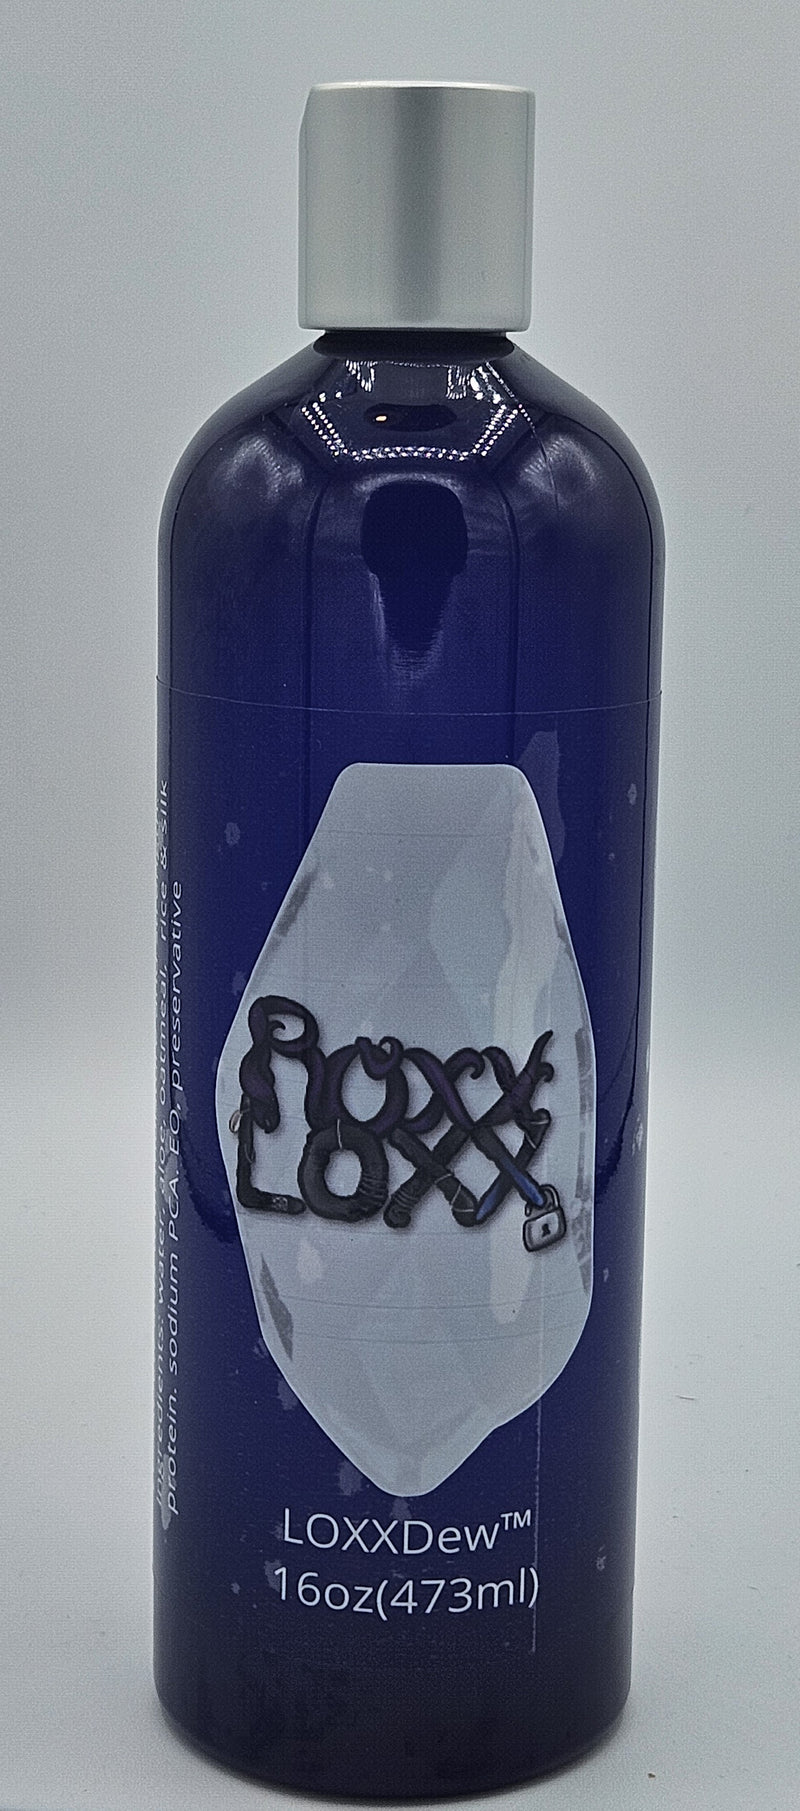 LOXXDew™ " moisture enhanced"